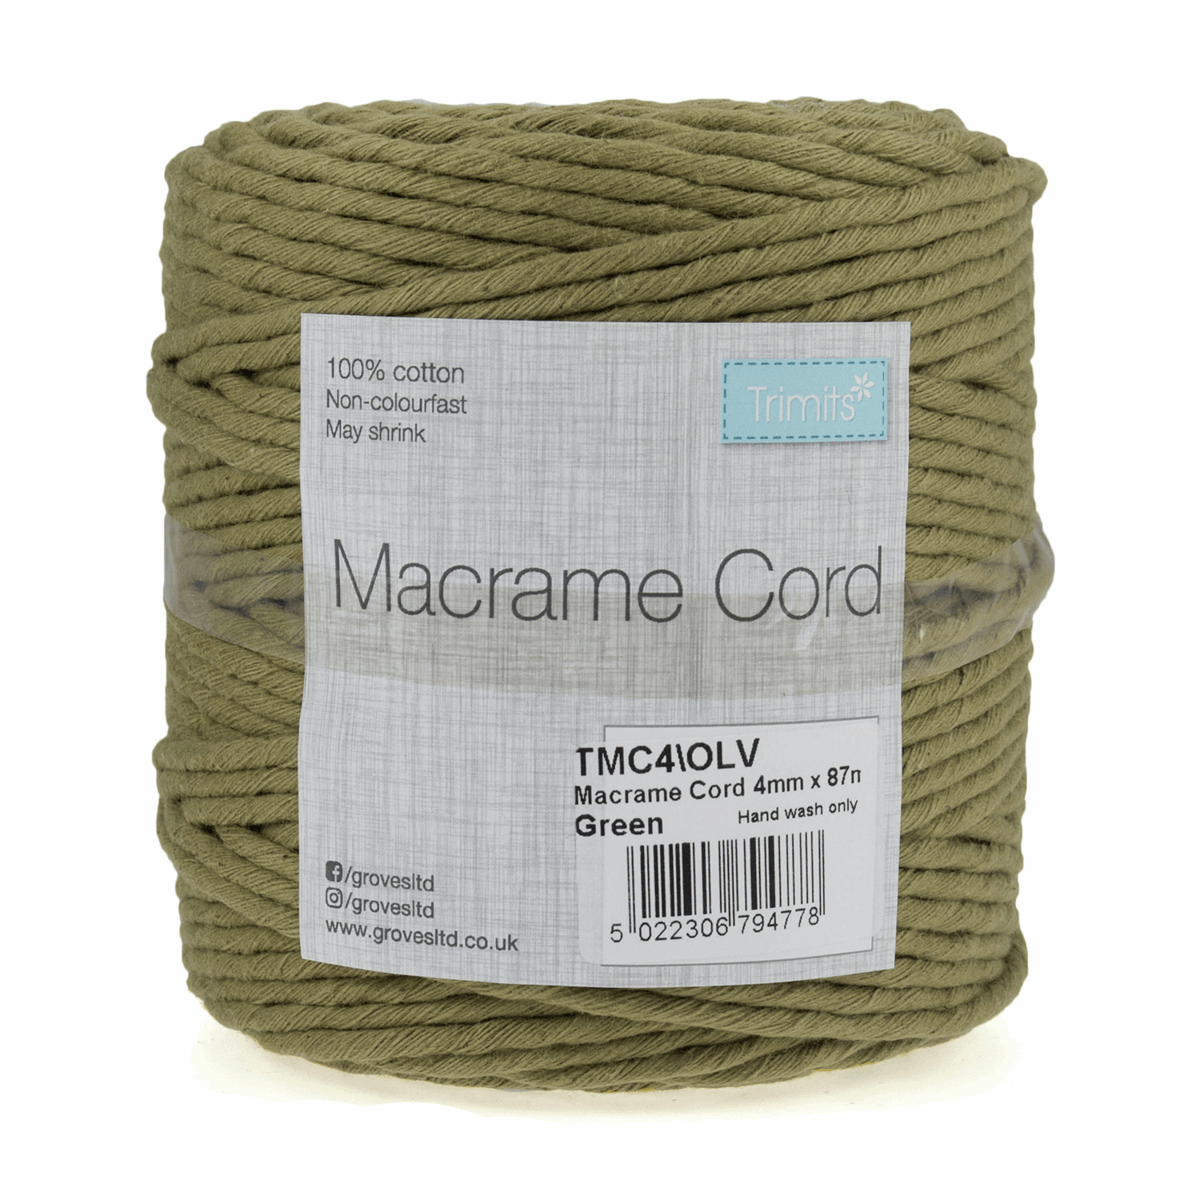 Olive Macrame Cord - 87m x 4mm